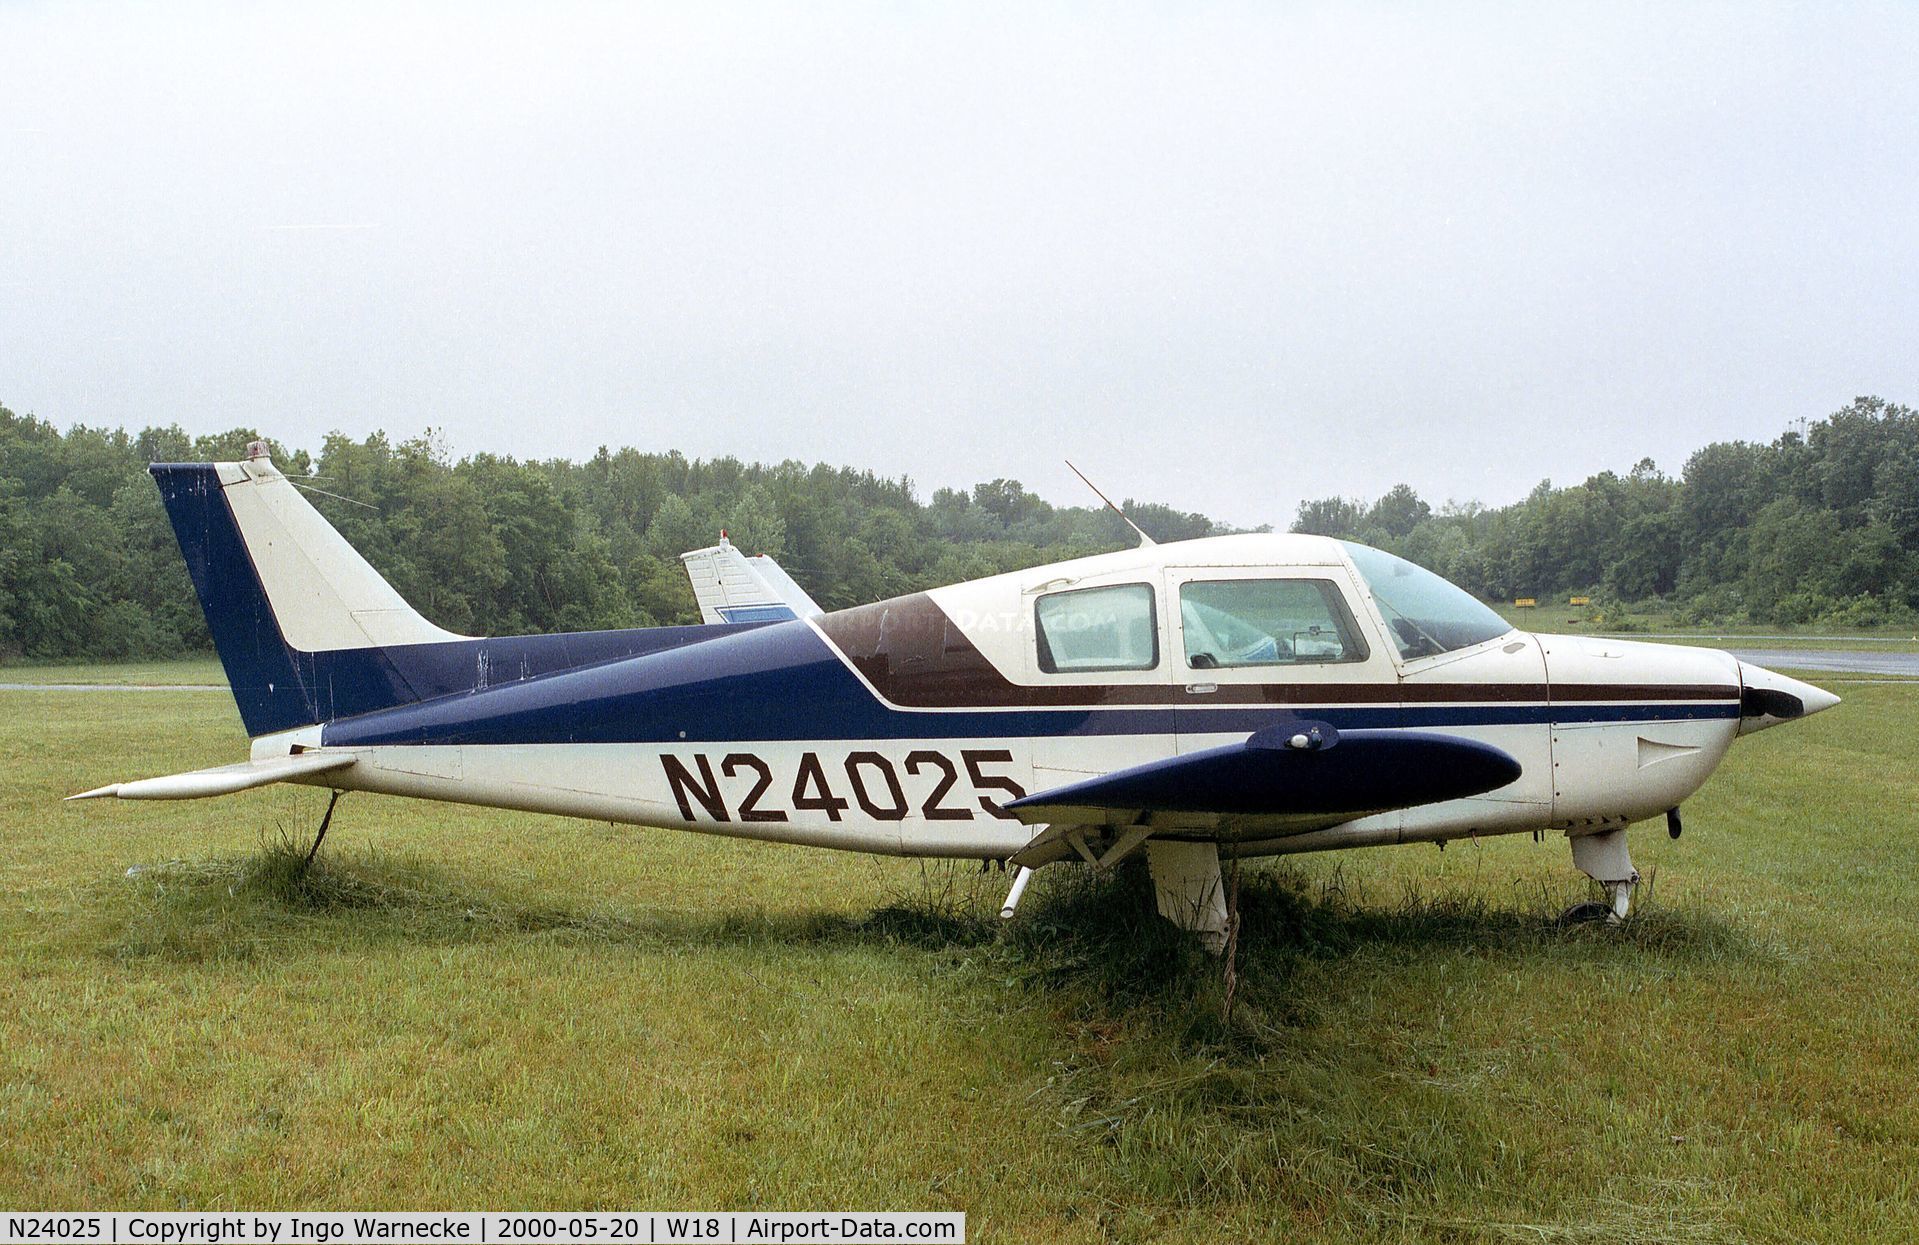 N24025, 1977 Beech B19 Sport 150 C/N MB-839, Beechcraft B19 Sport 150 at Suburban Airport, Laurel MD